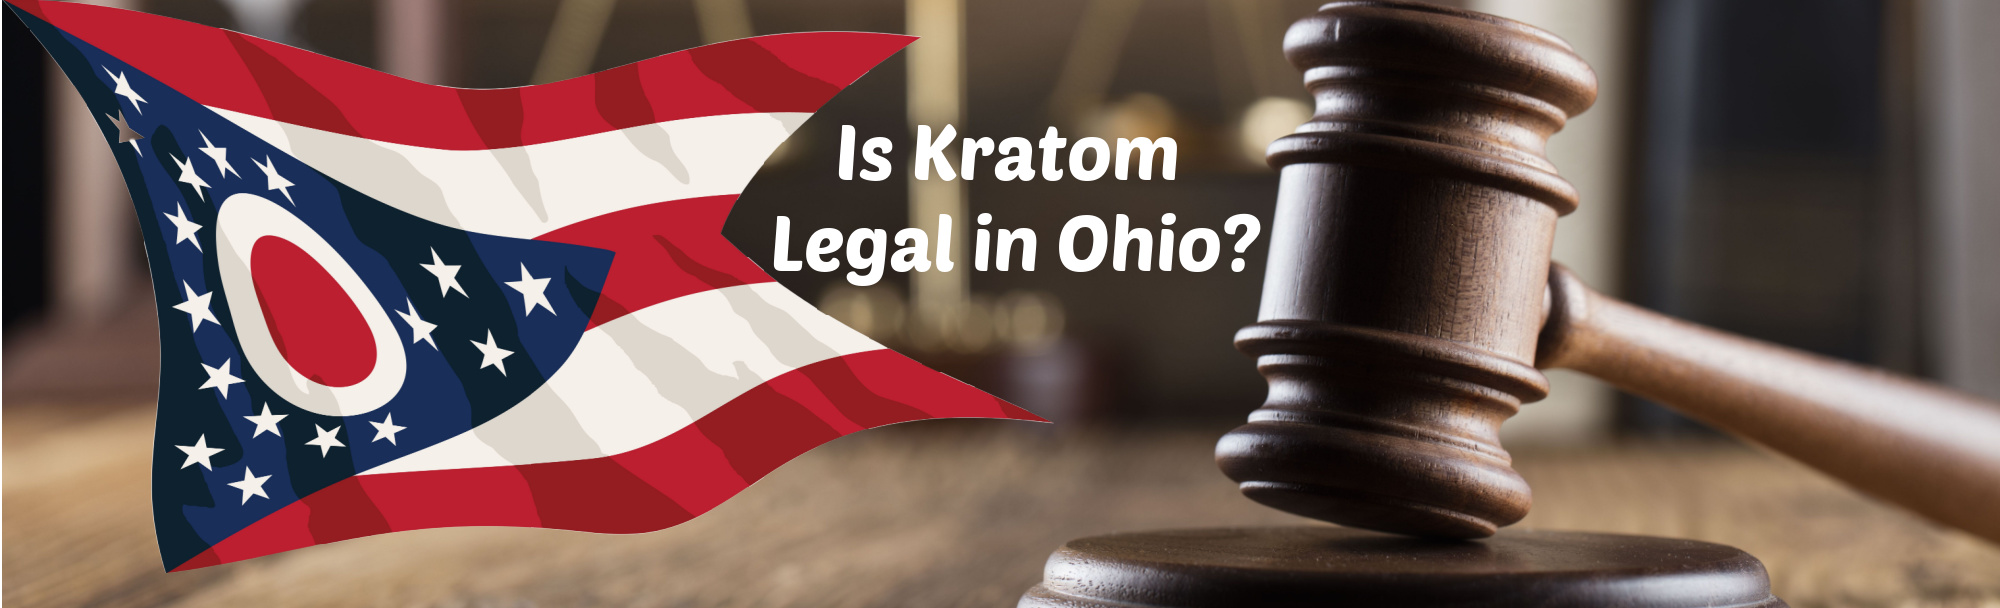 image of is kratom legal in ohio